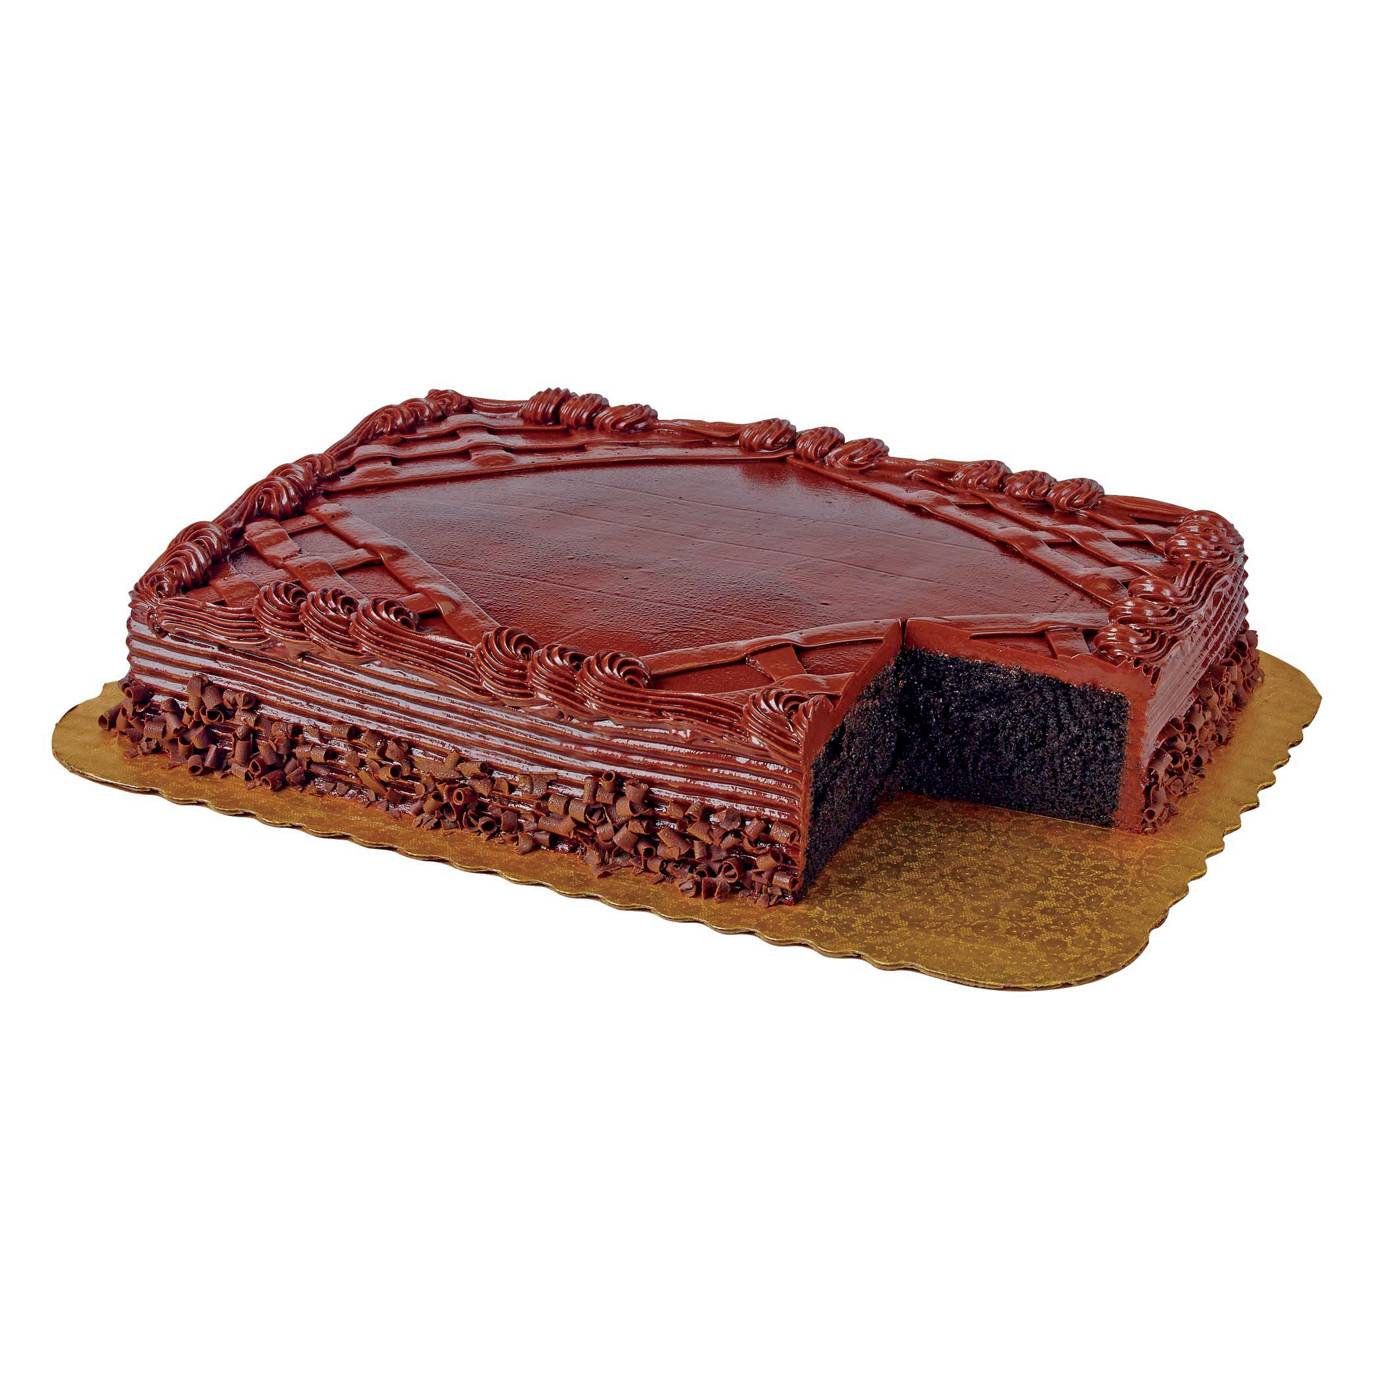 H-E-B Bakery Chocolate Fudge Cake; image 2 of 2